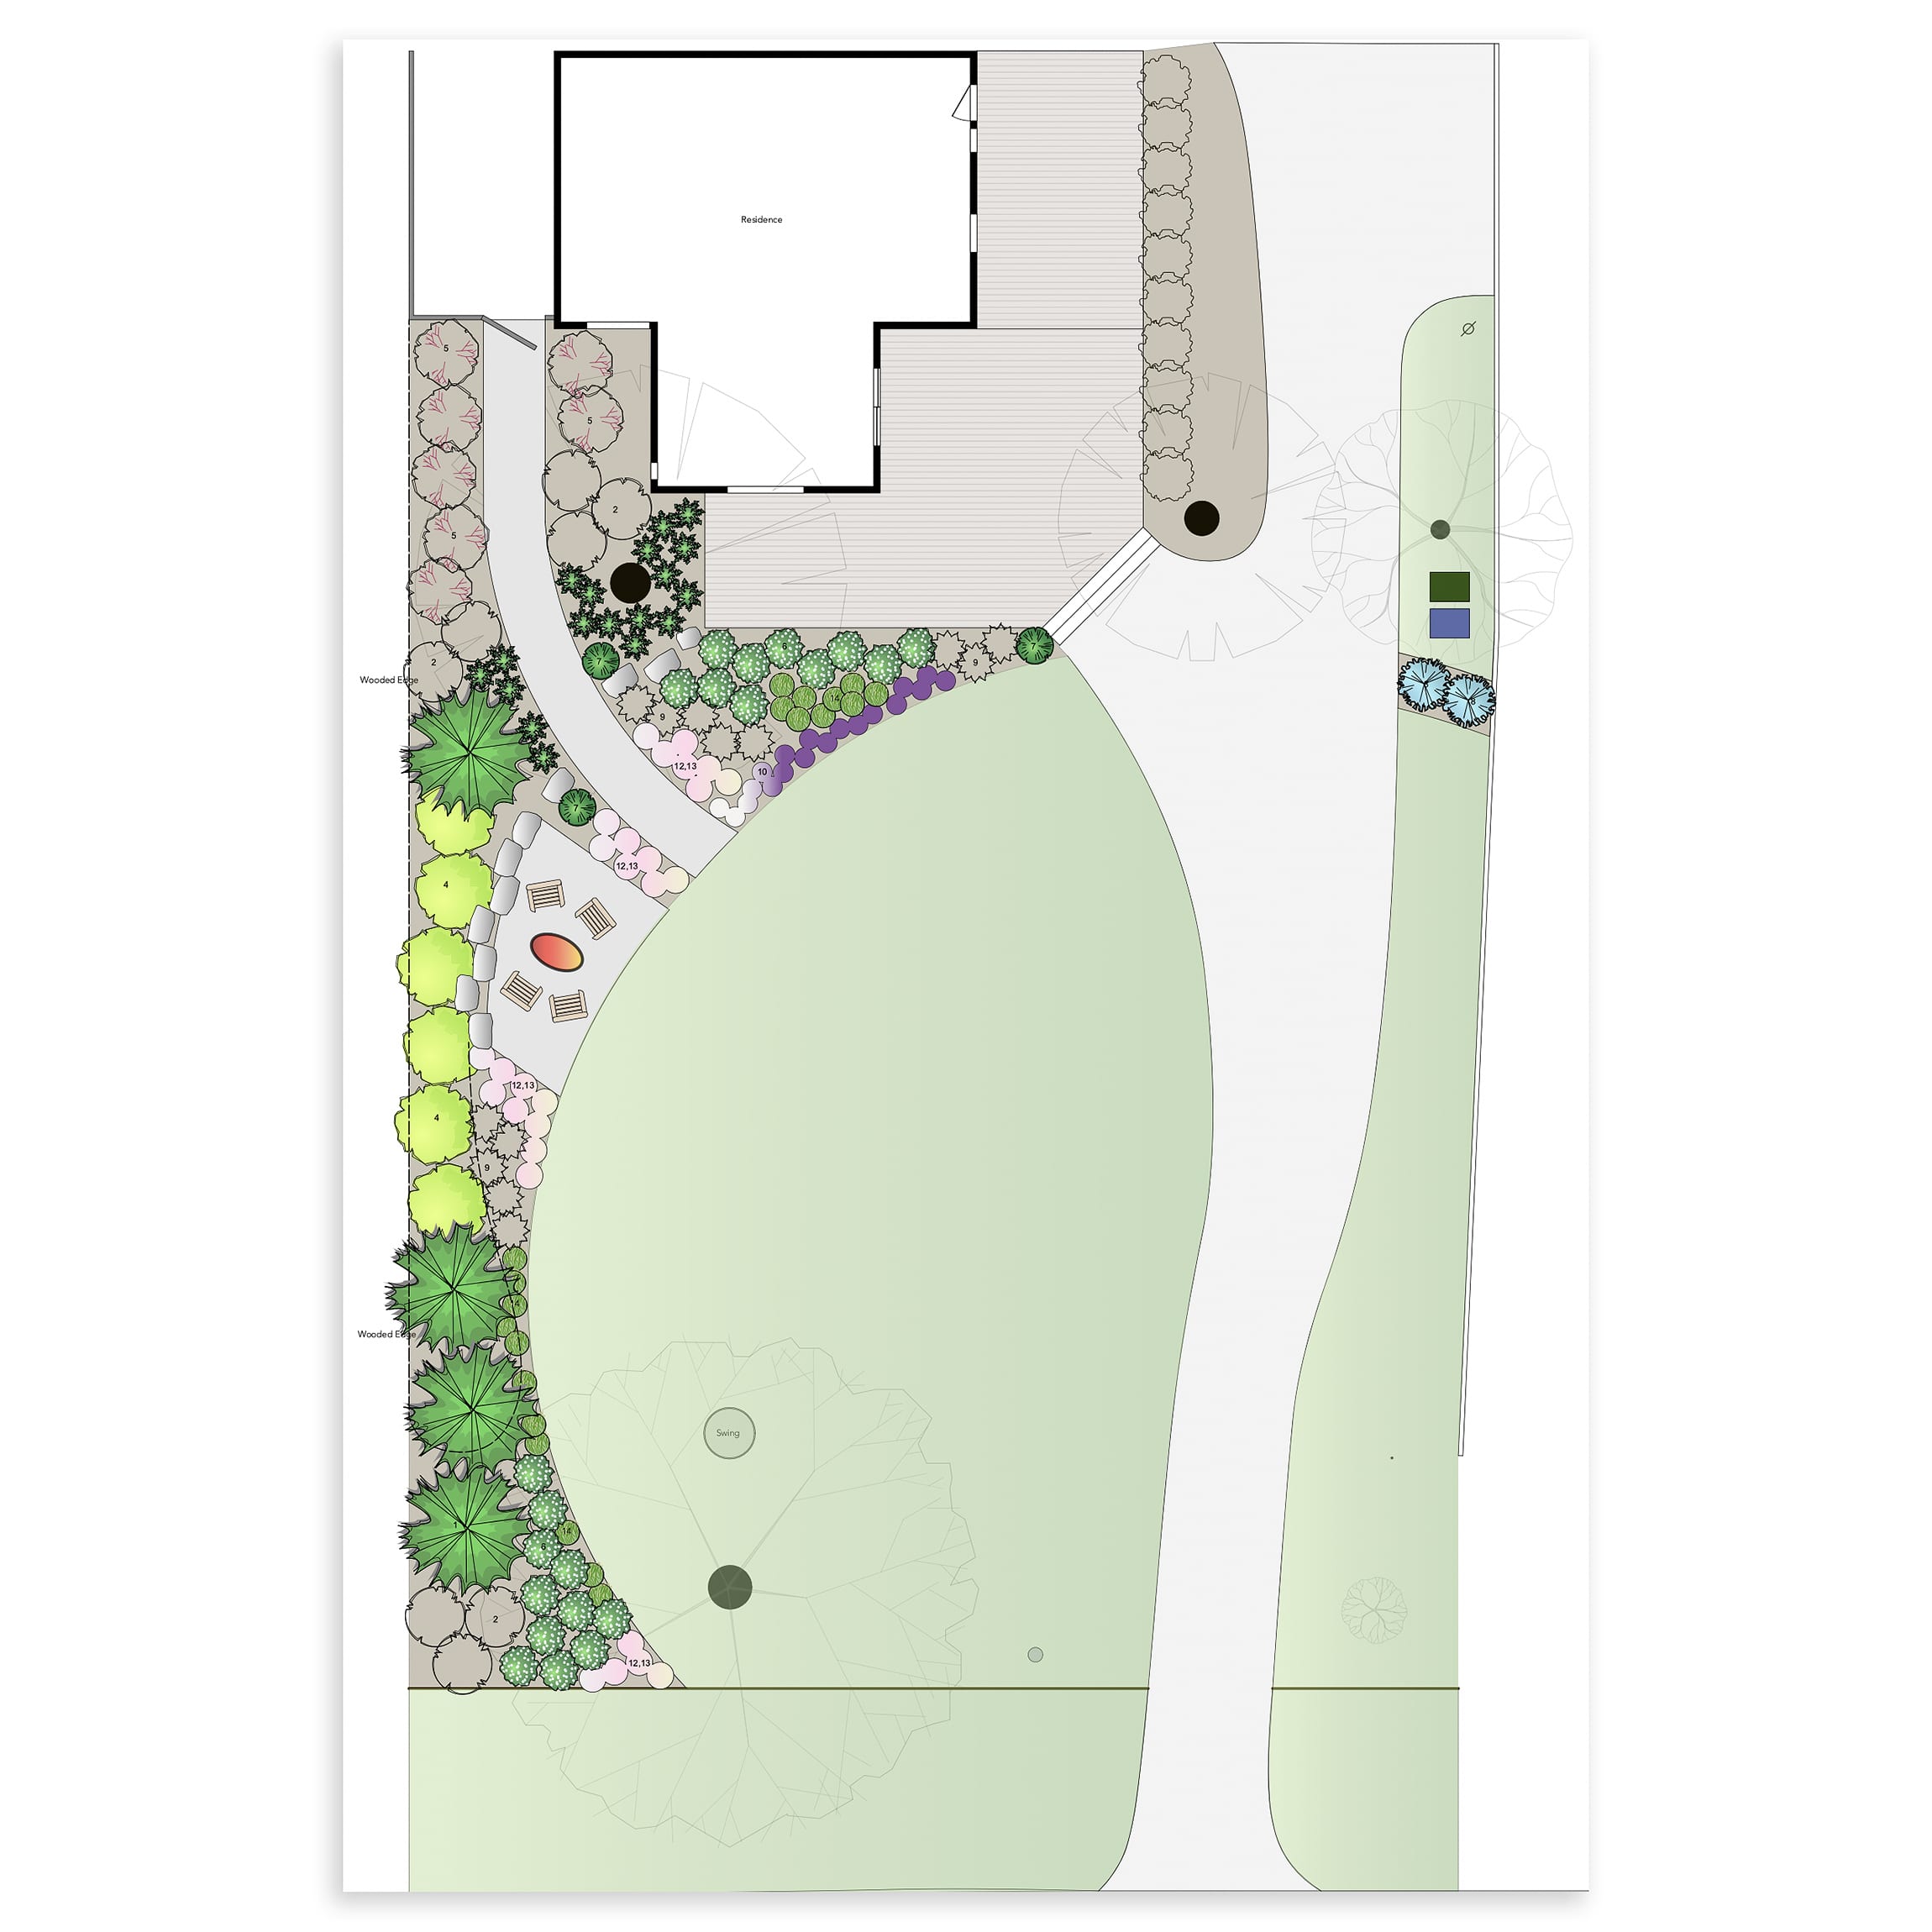 Landscaping design plan | via Yellow Brick Home